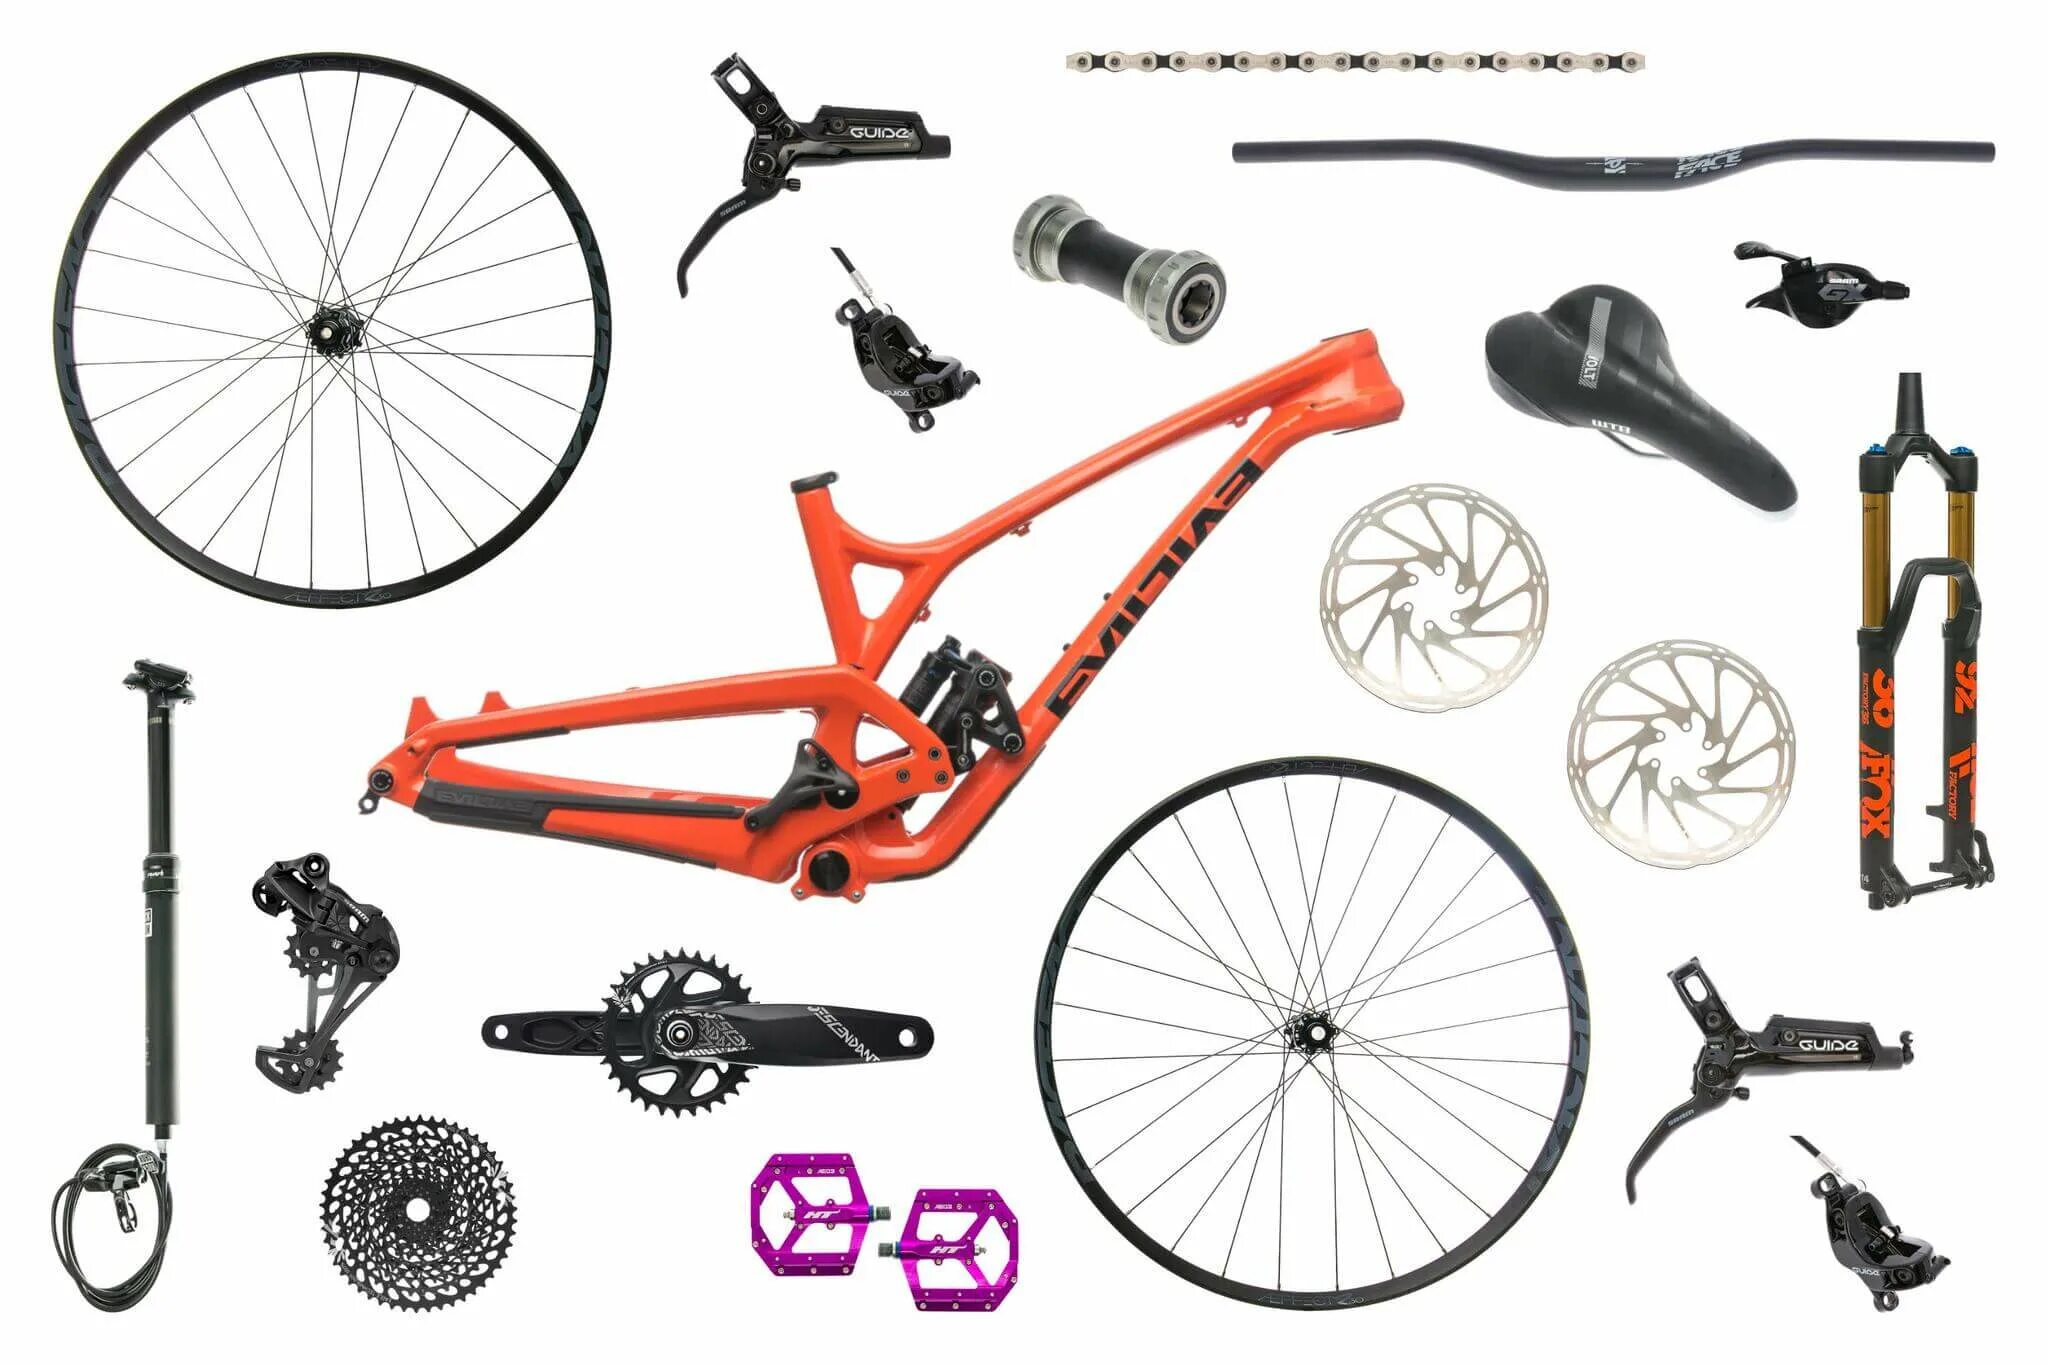 Bike parts. Детали сборки МТБ велосипеда. Запчасти велосипеда Challenger. Доп детали на велосипед. Velosiped zapchast.